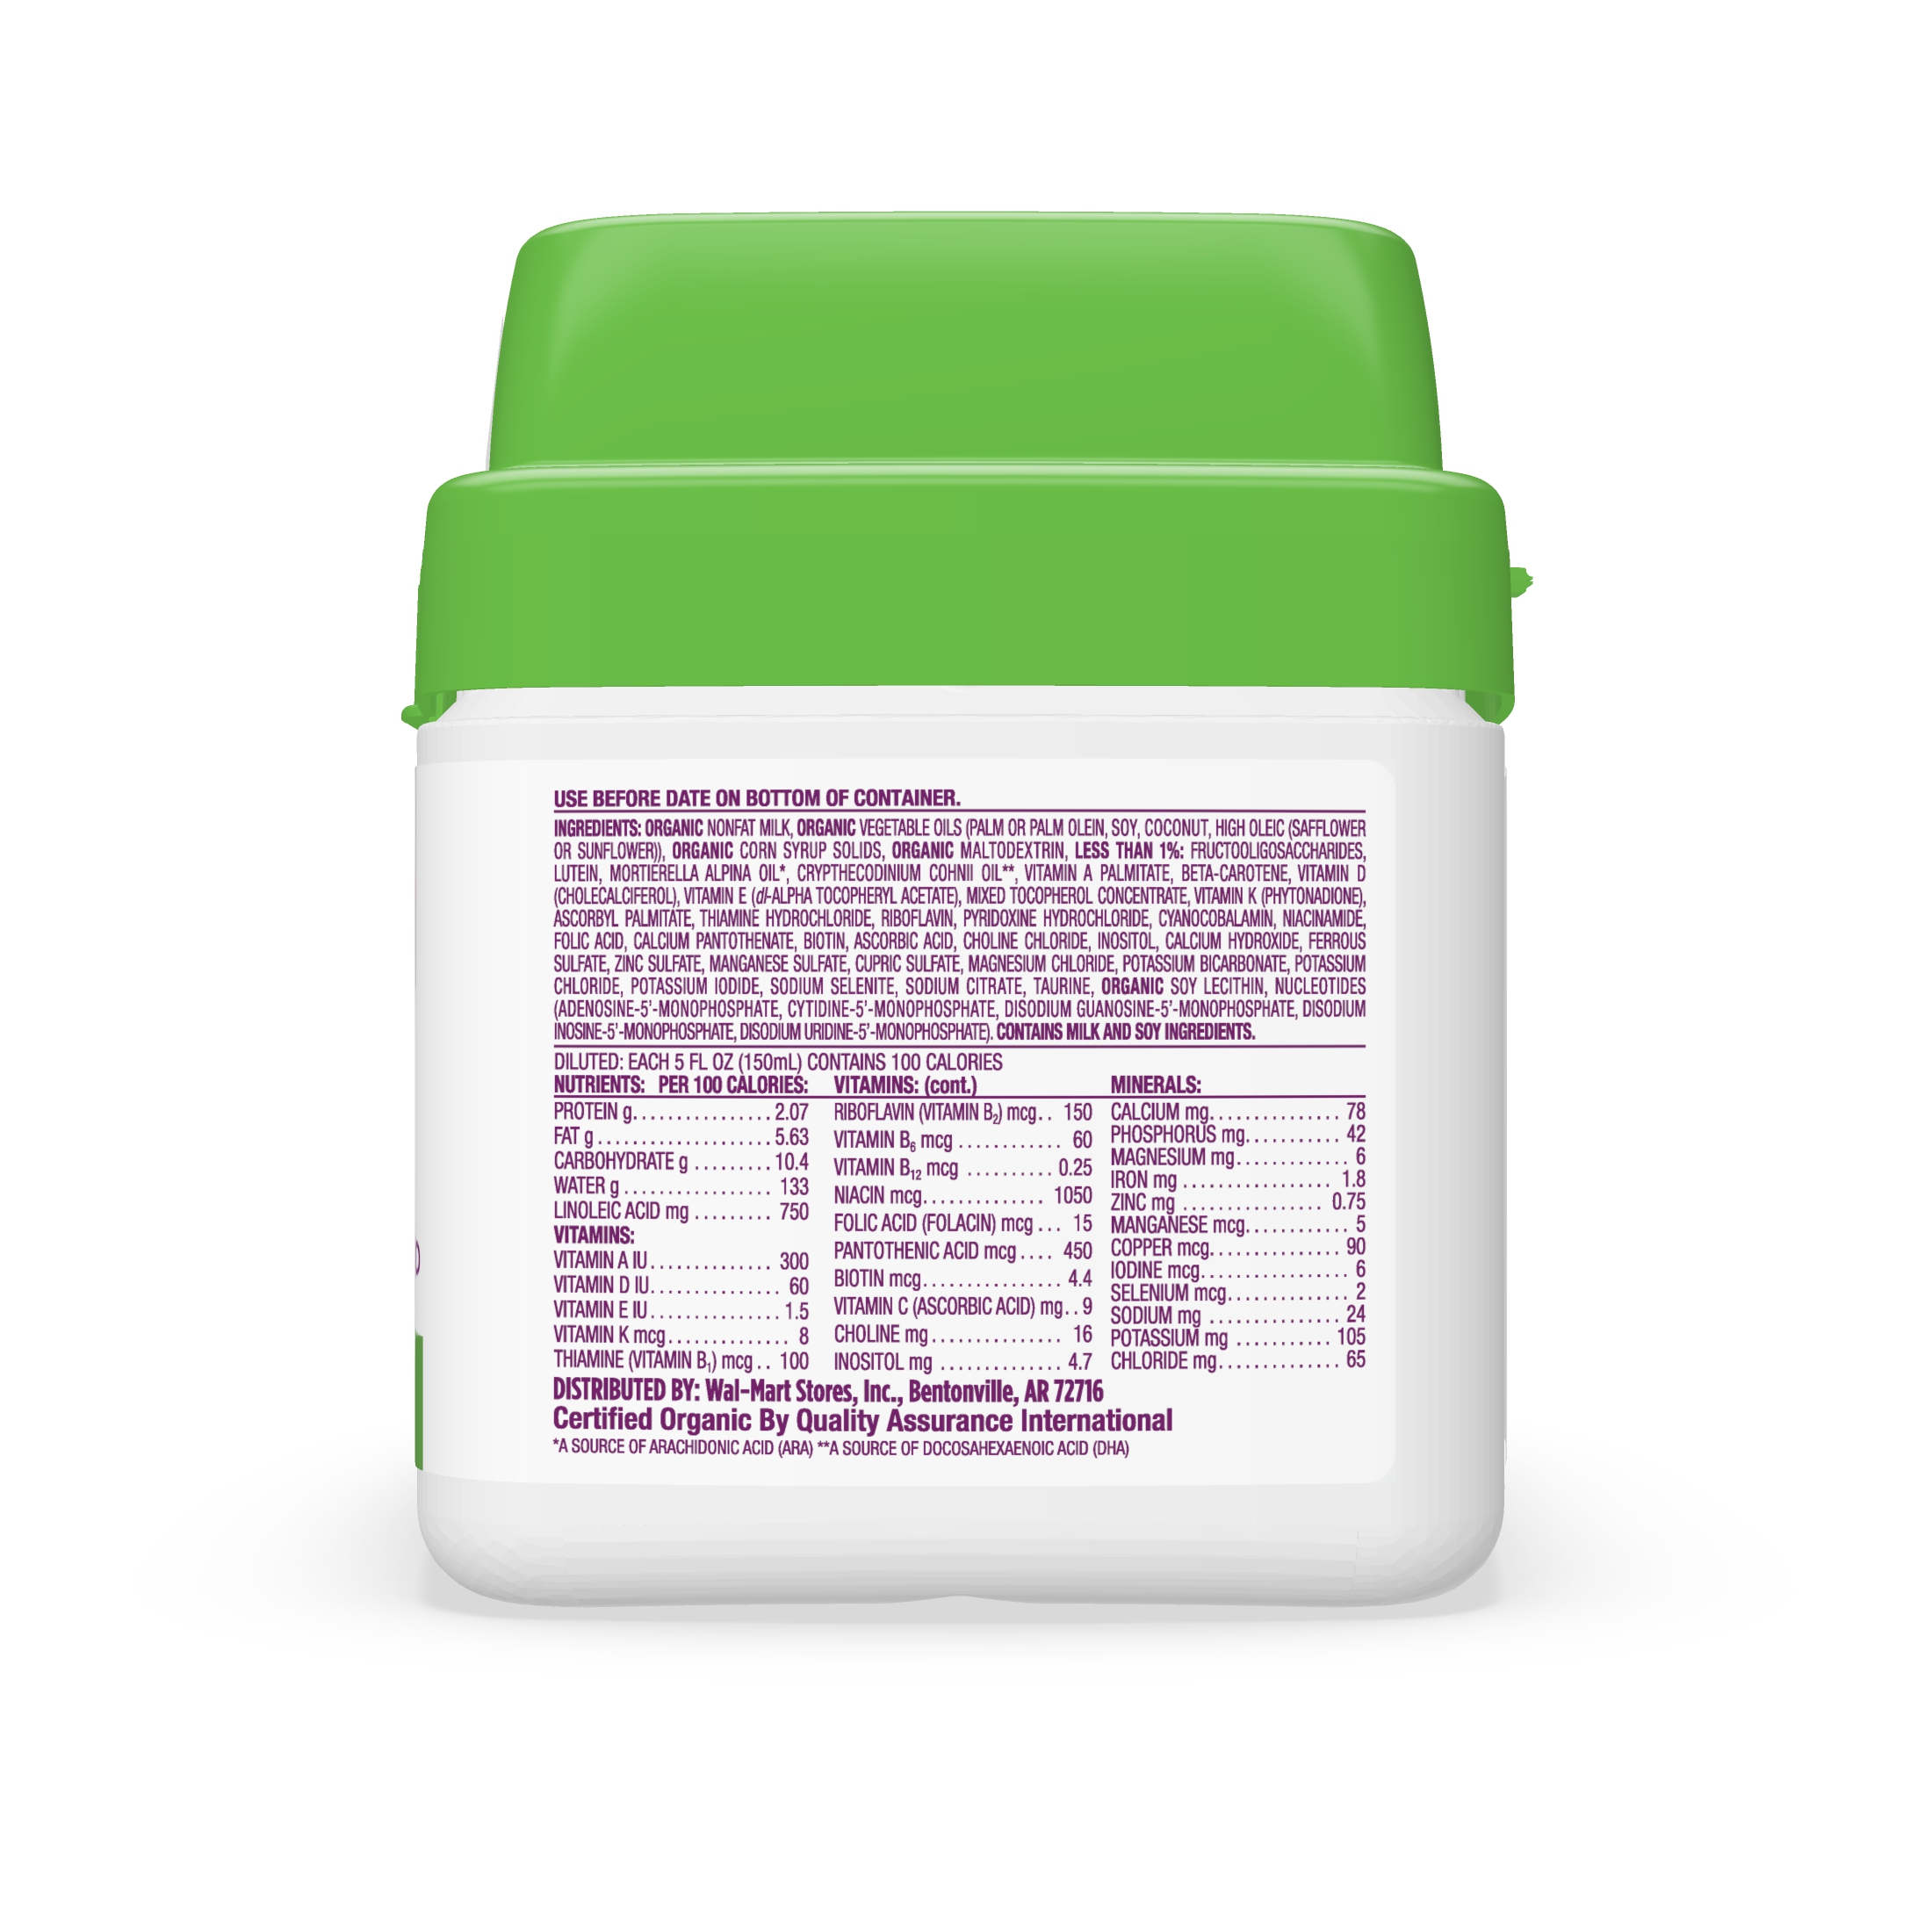 Parent's Choice Organic GMO and Gluten-Free Powder Baby Formula, 23.2 oz Tub - image 5 of 12